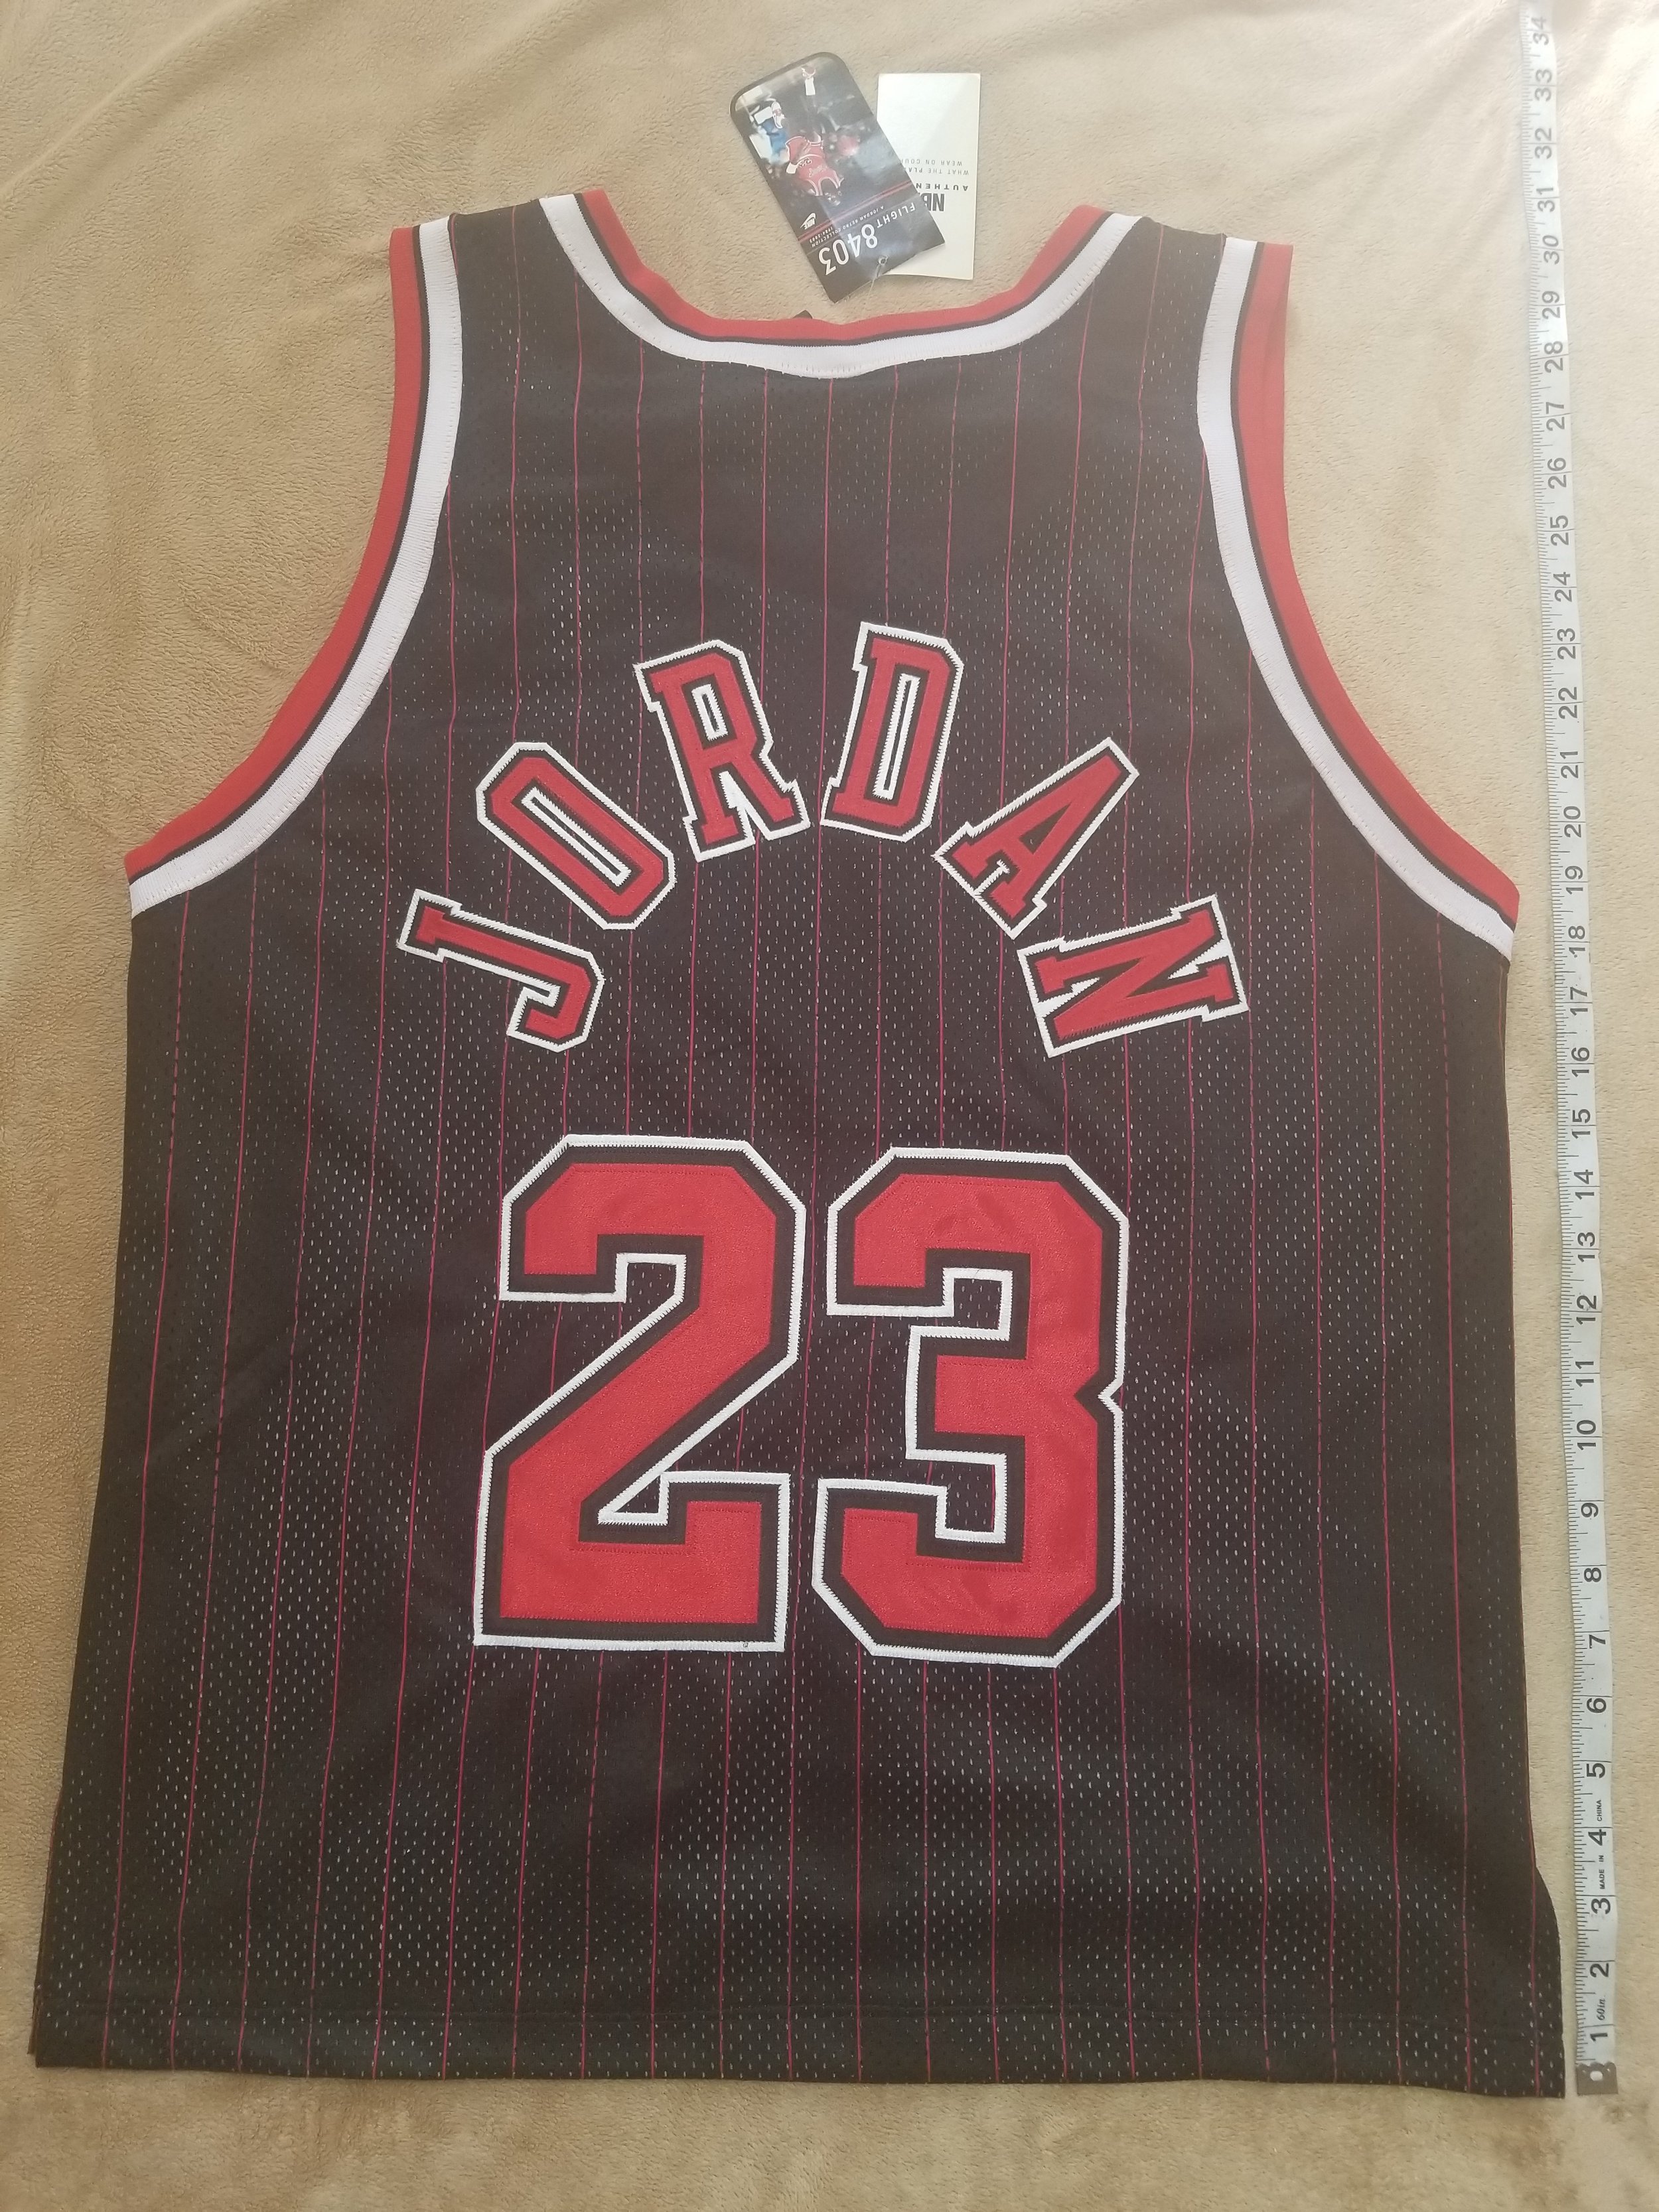 Nike / Jordan / Bulls alternate pinstripe jersey for Sale in Nashville